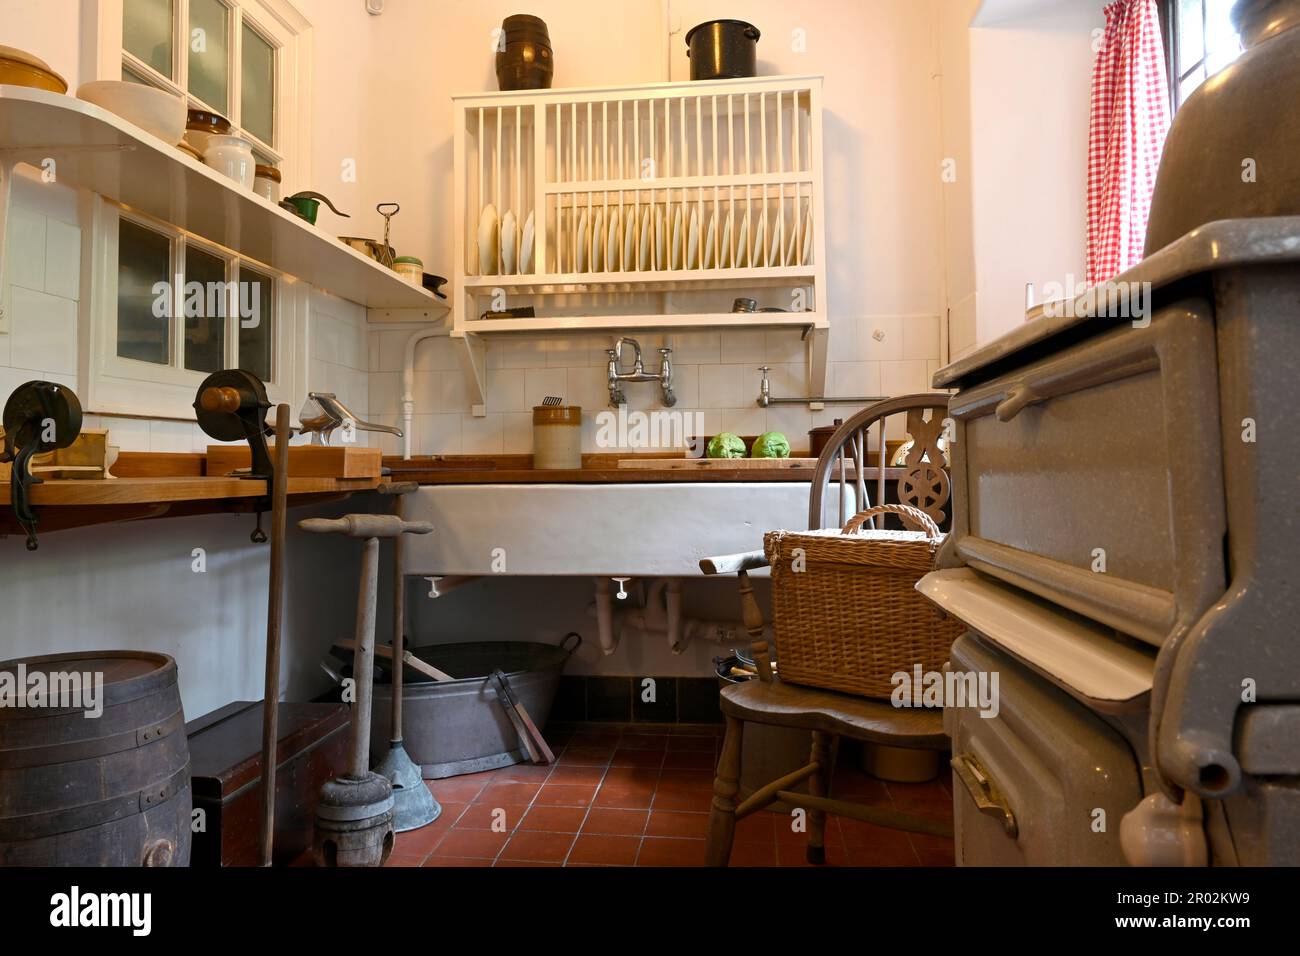 Coleton Fishacre, Kingswear, Dartmouth, Devon, England, UK. - interior view of kitchen. Stock Photo